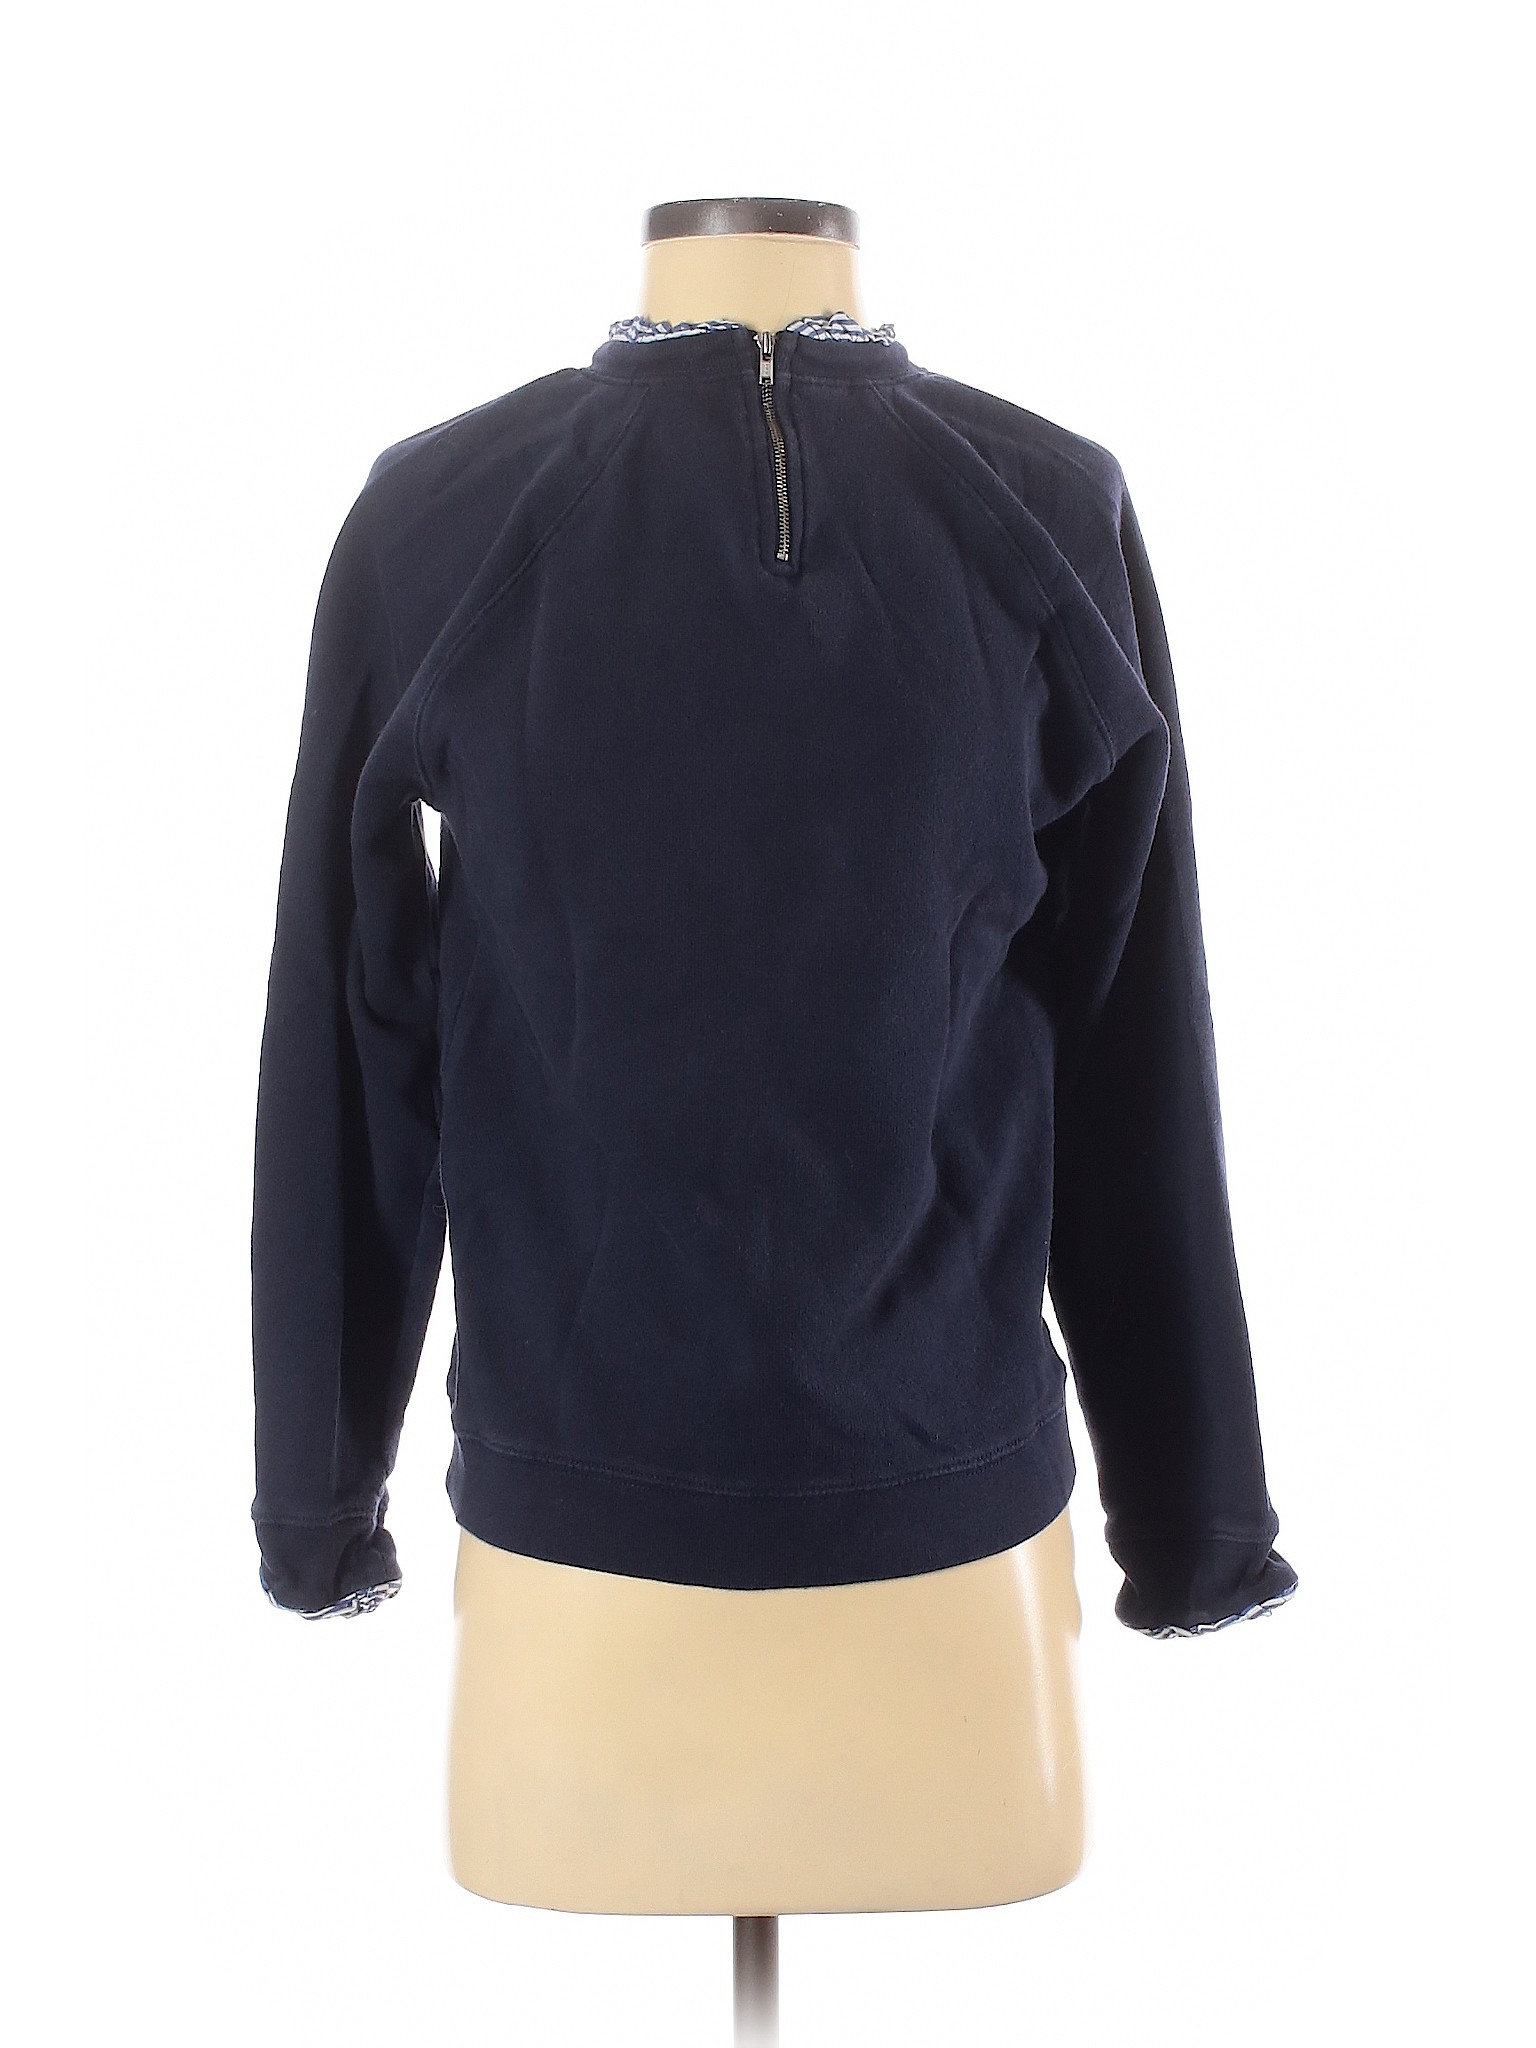 J.Crew Factory Store Women Blue Pullover Sweater S | eBay